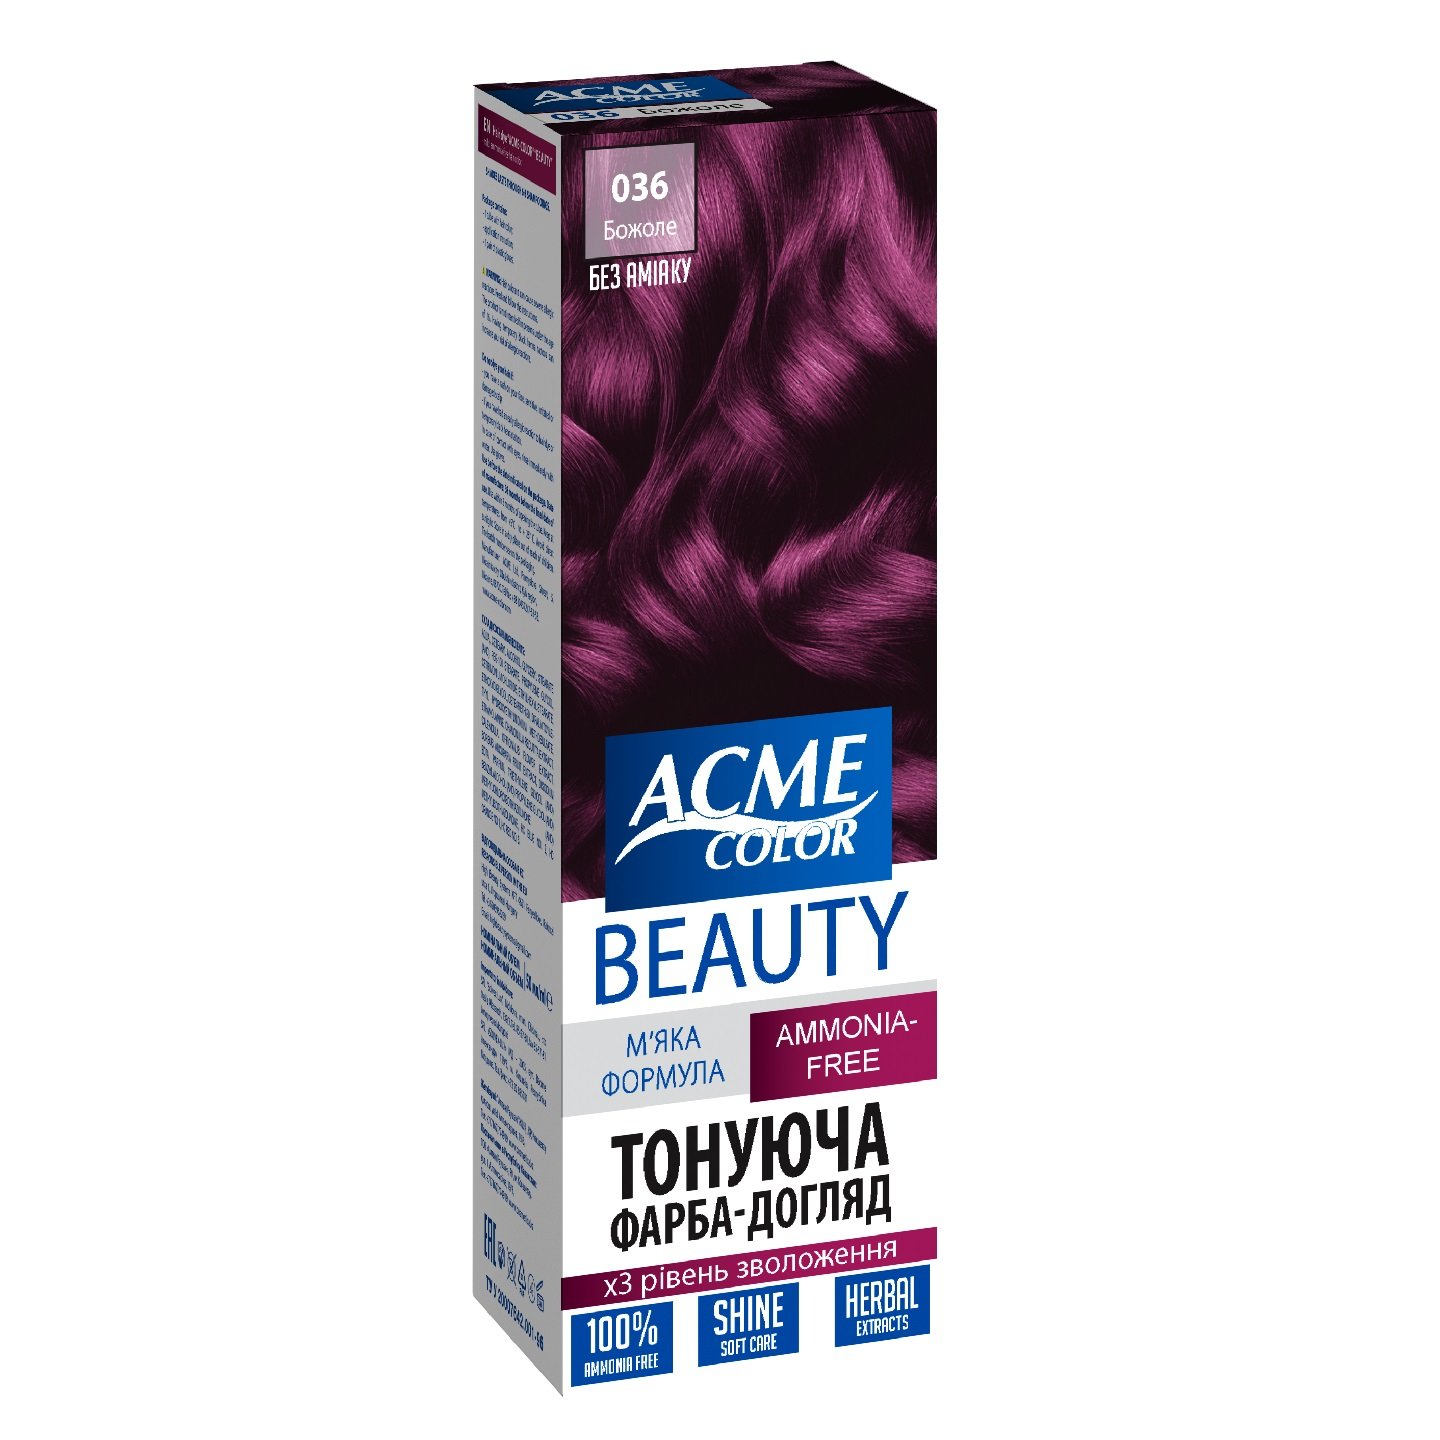 Гель-фарба для волосся Acme-color Beauty, відтінок 036 (Божоле), 69 г - фото 1